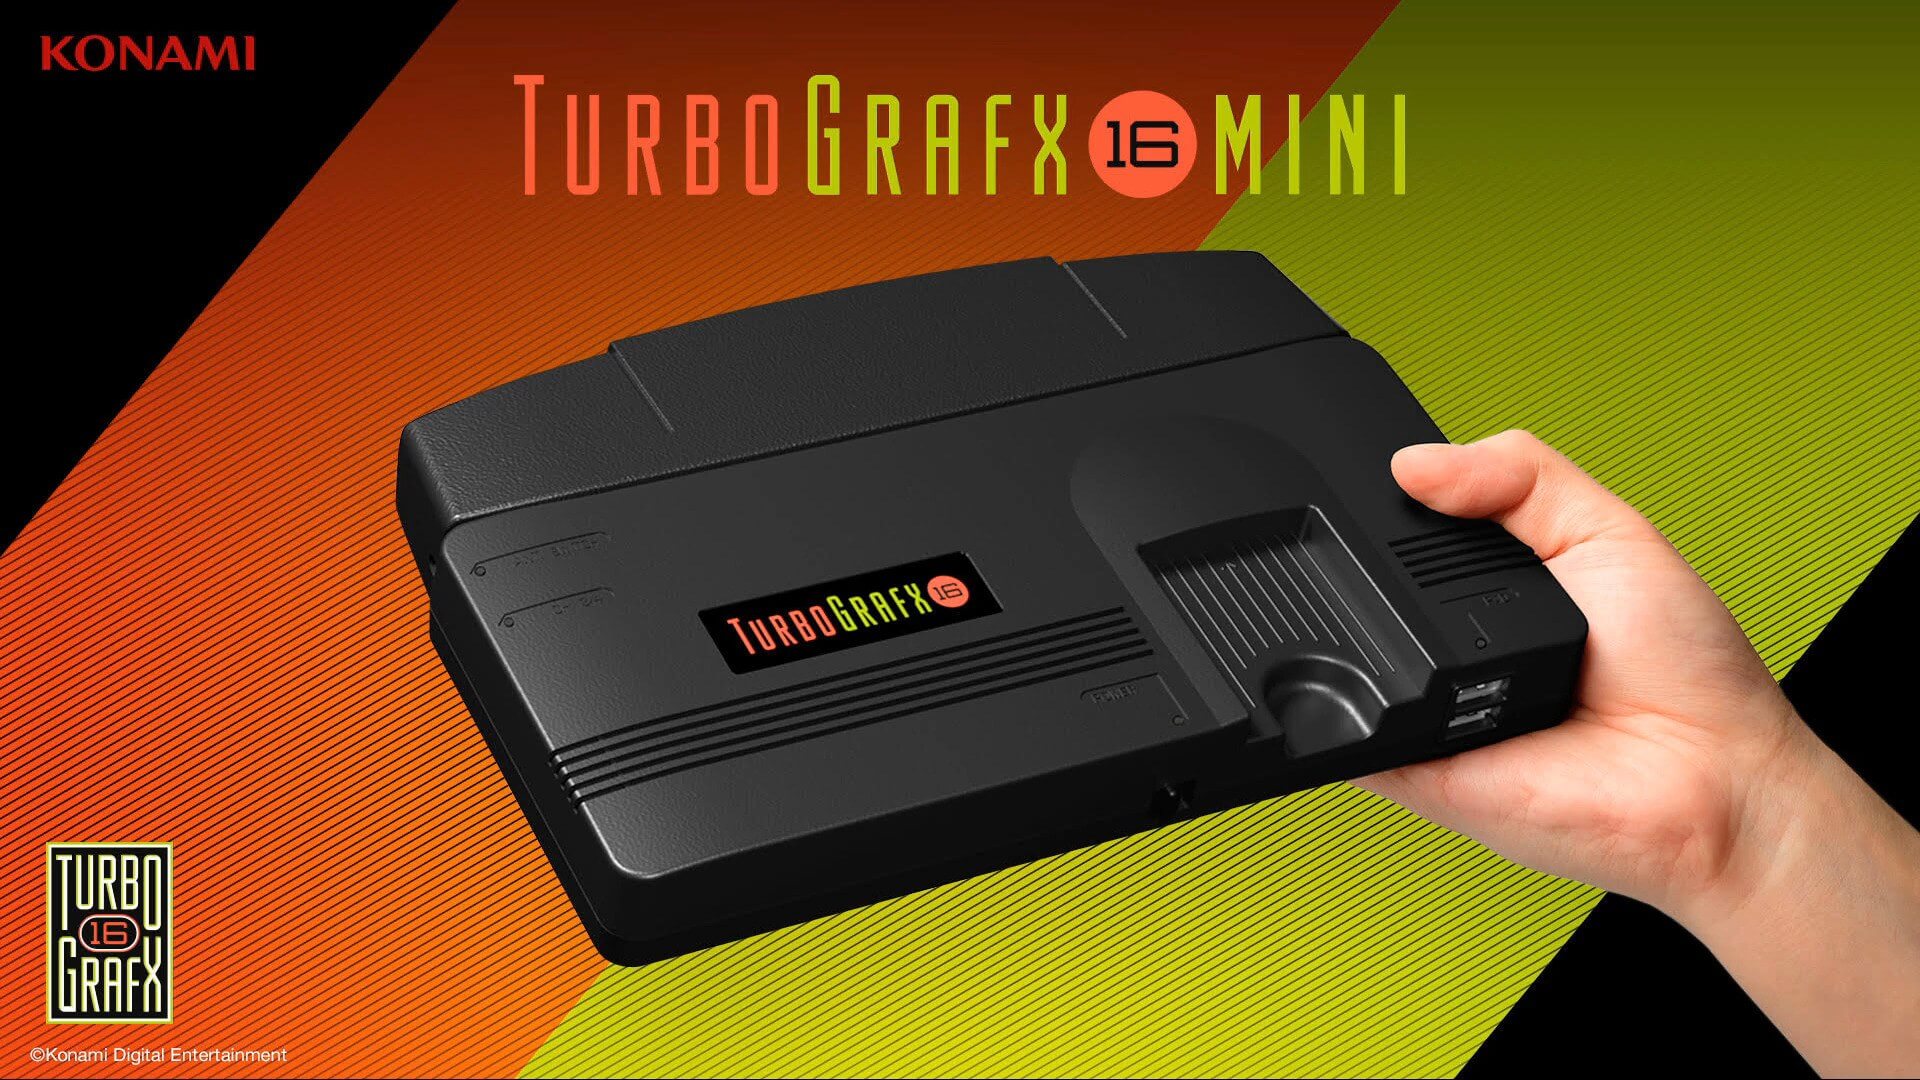 TurboGrafx-16 mini gets full game list, launch date